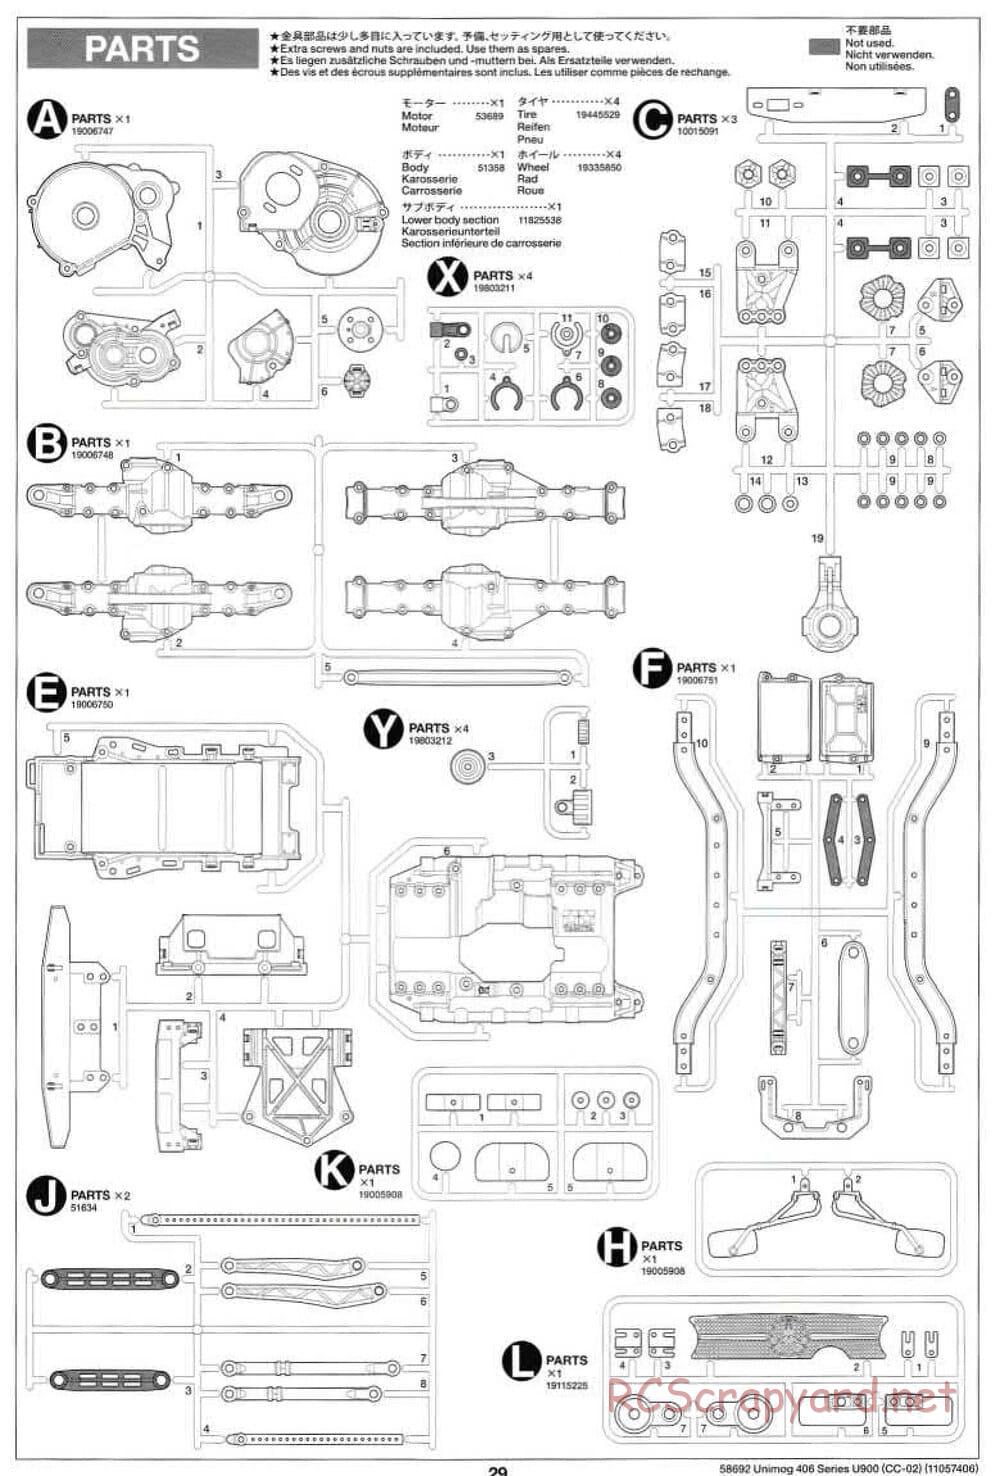 Tamiya - Mercedes-Benz Unimog 406 Series U900 - CC-02 Chassis - Manual - Page 29